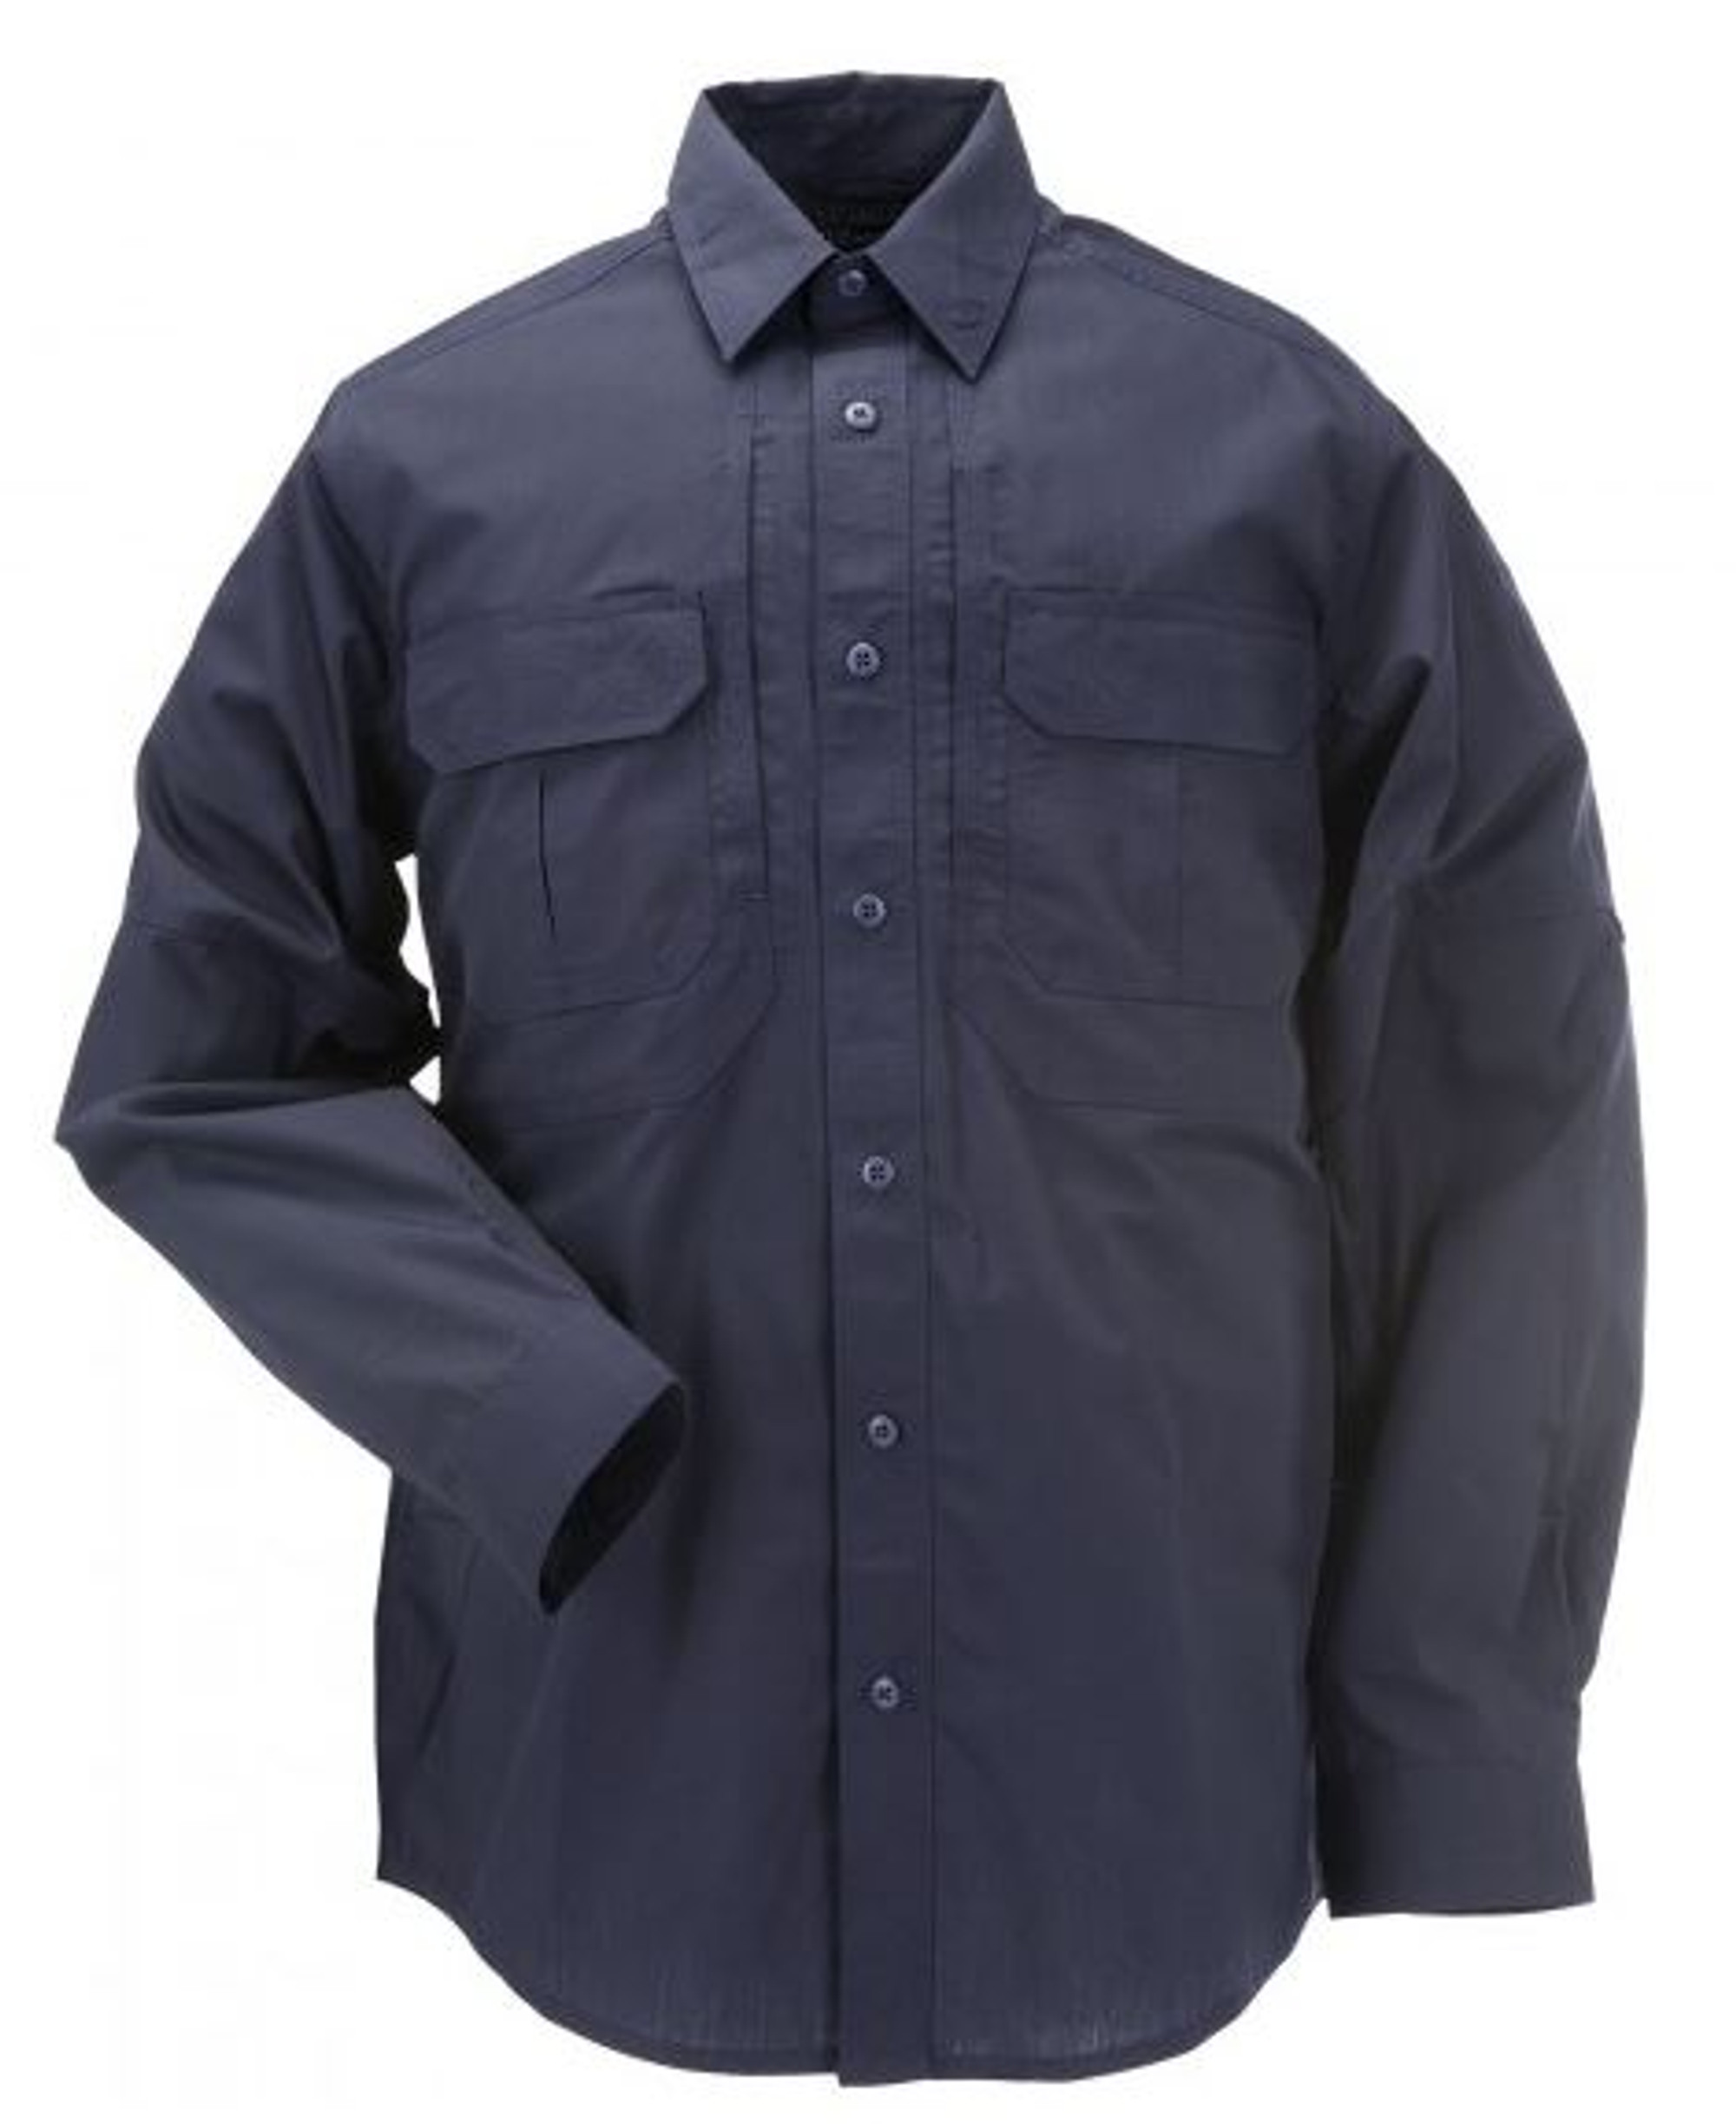 5.11 Taclite Pro L/S Shirt - Dark Navy